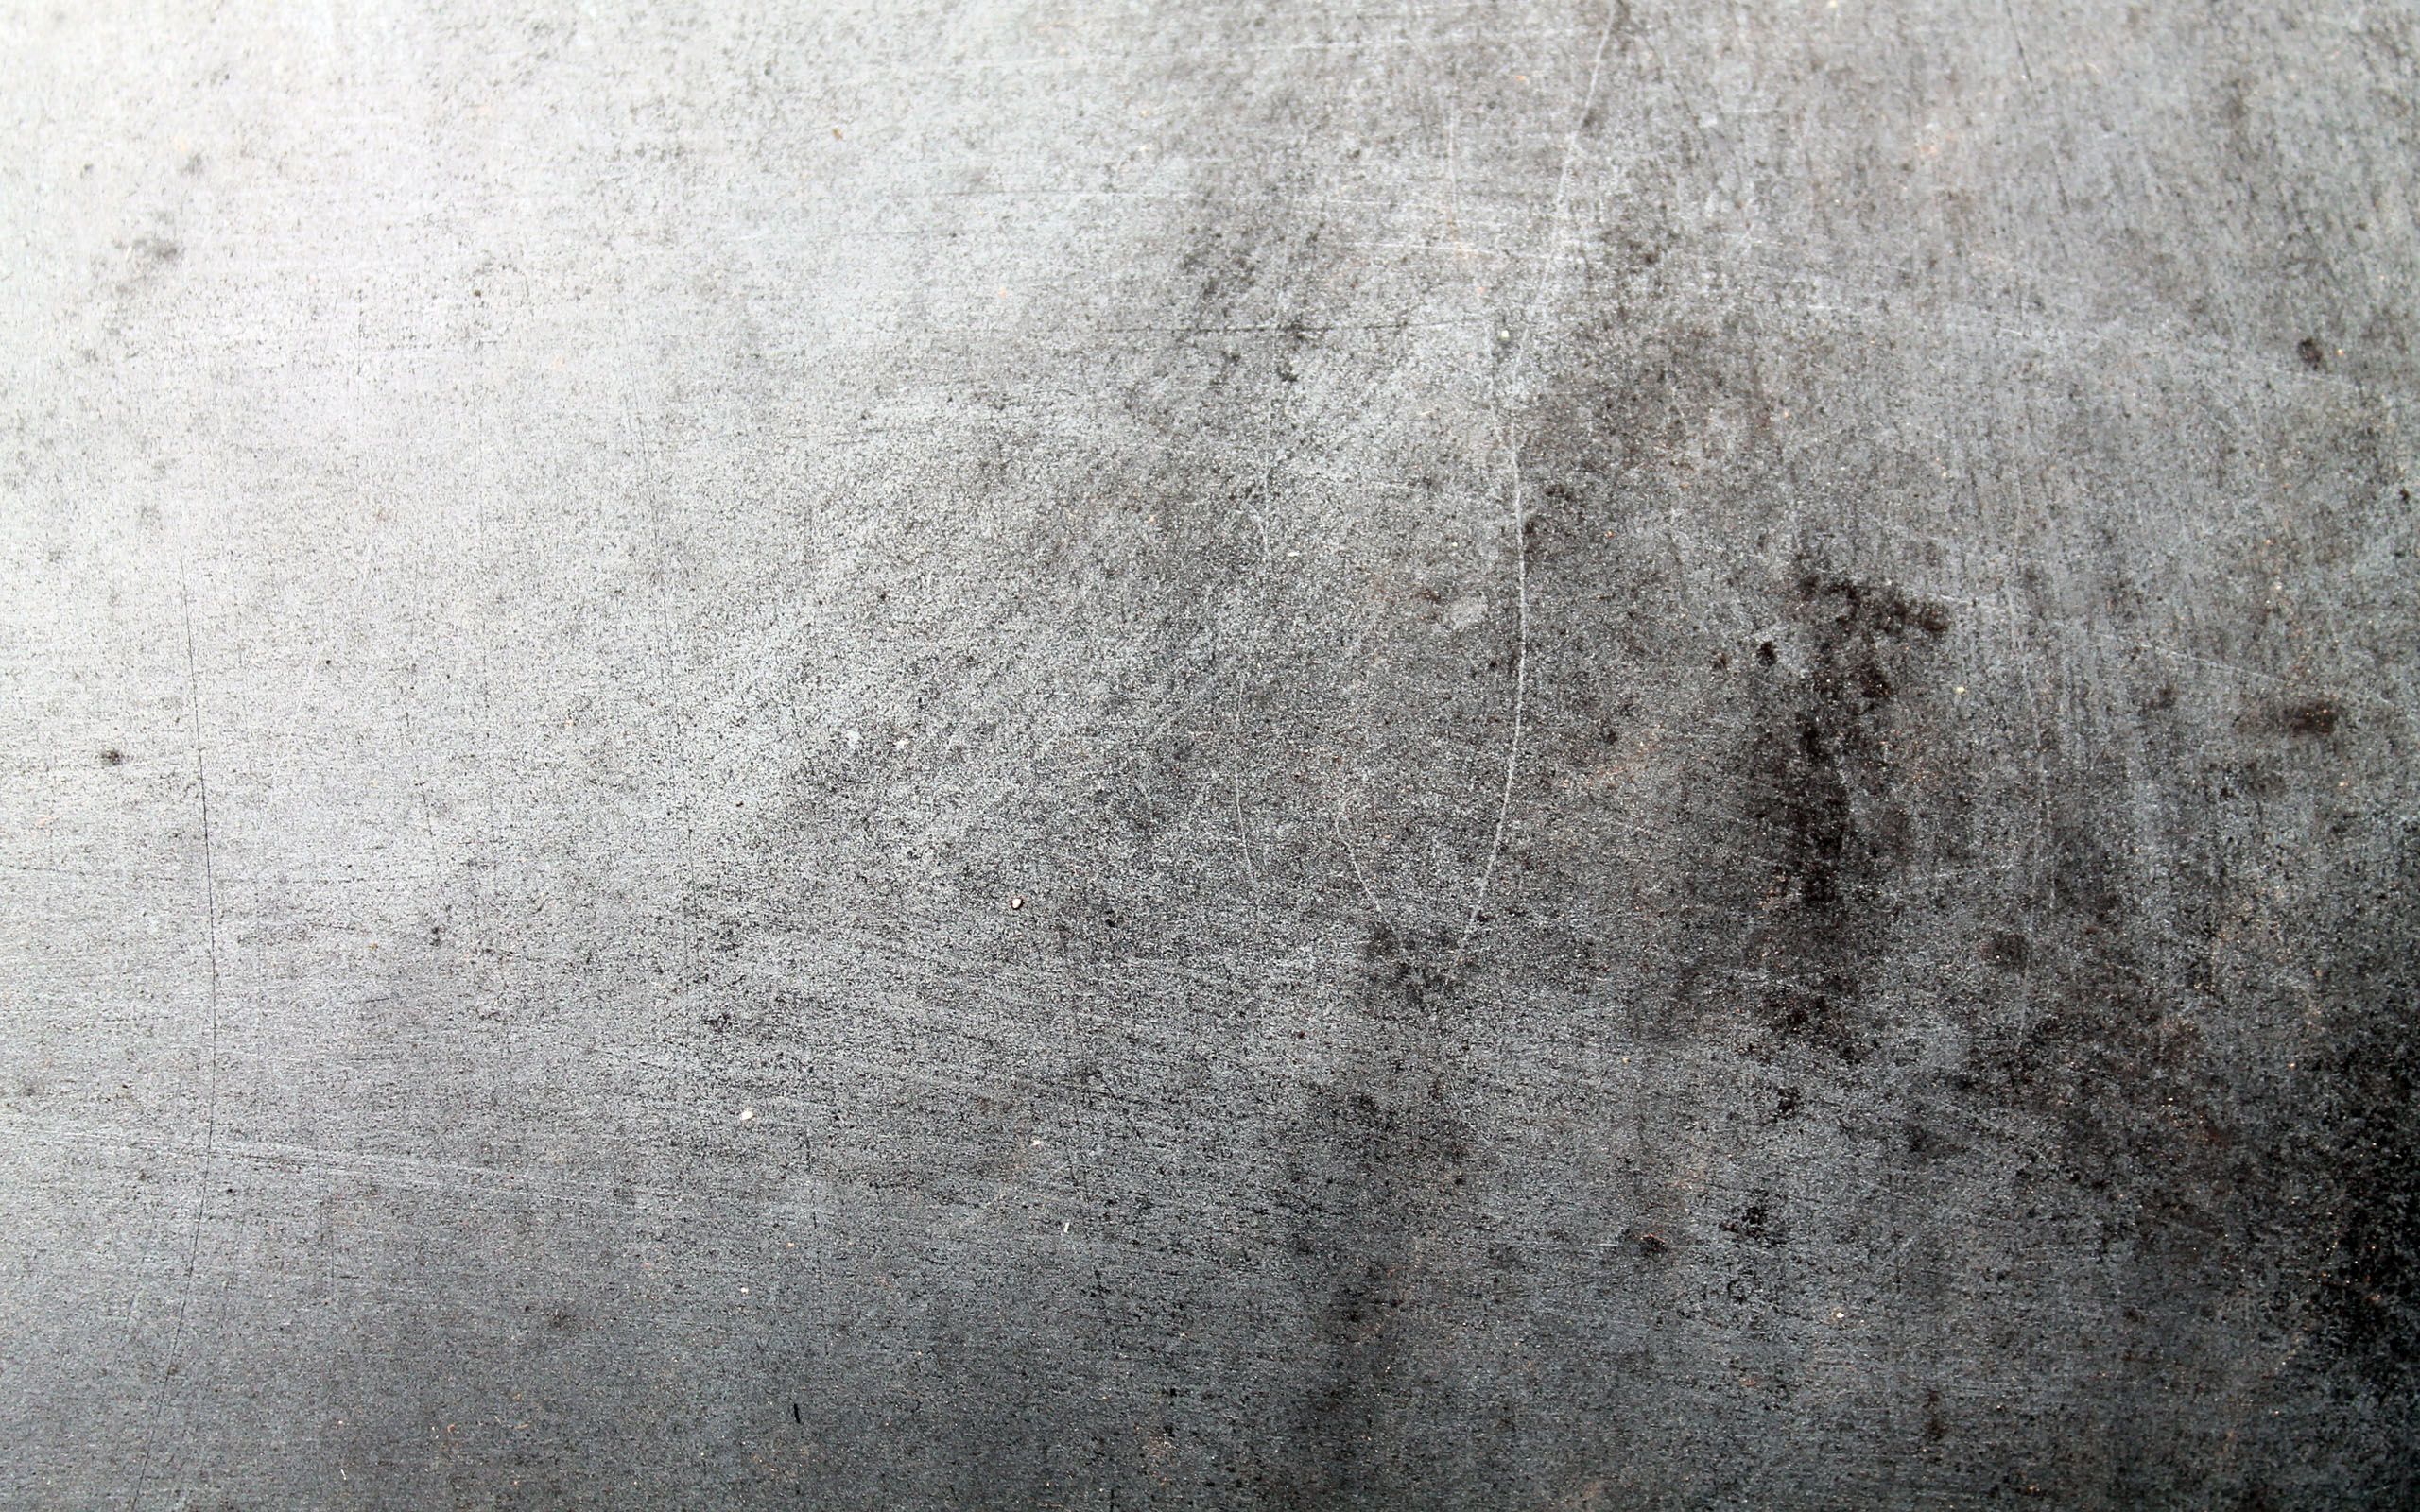 Scratched Concrete Wallpaper 6019 2560x1600.com